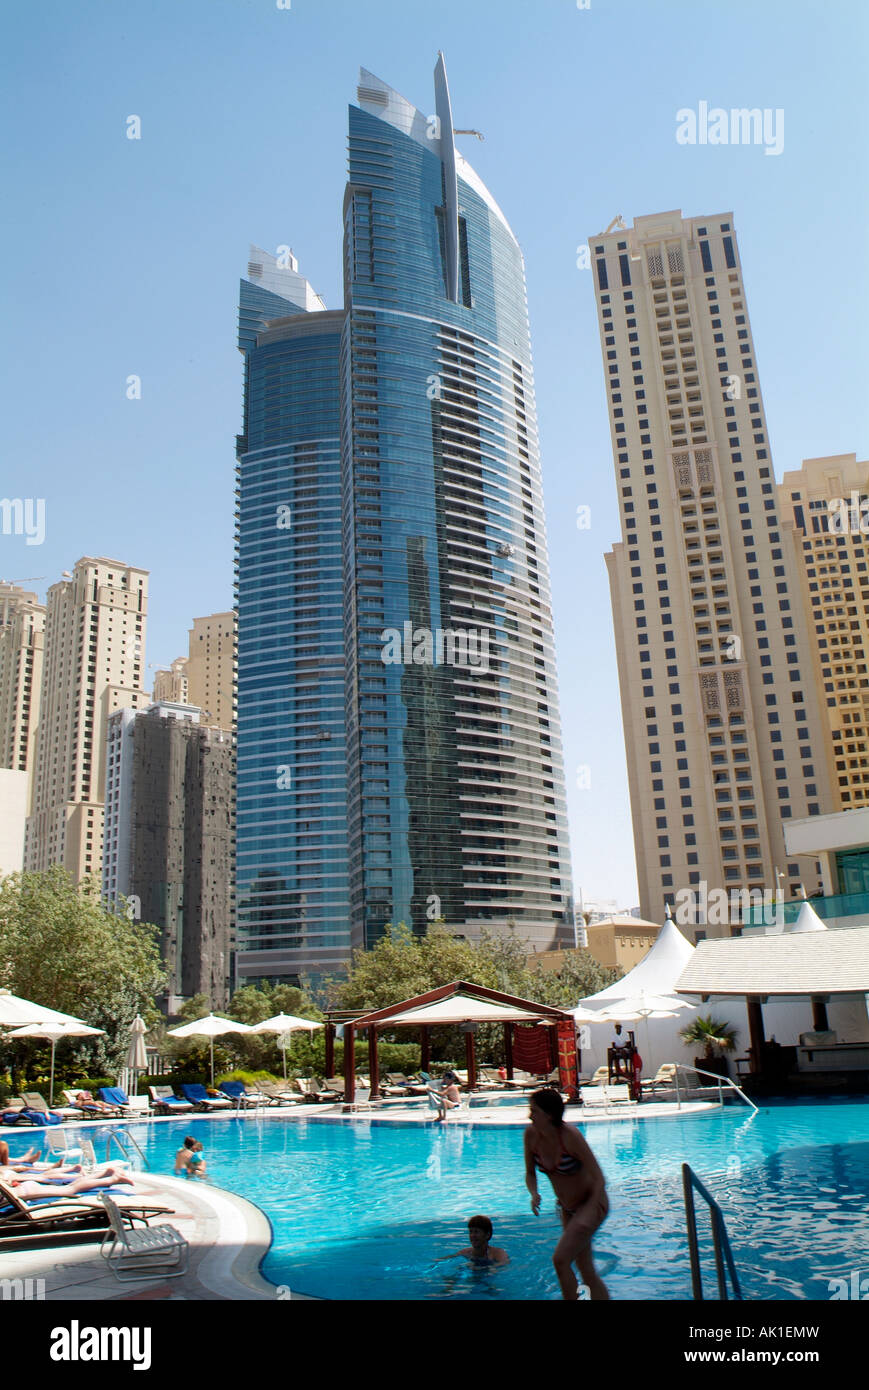 Dubai hilton hi-res stock photography and images - Alamy